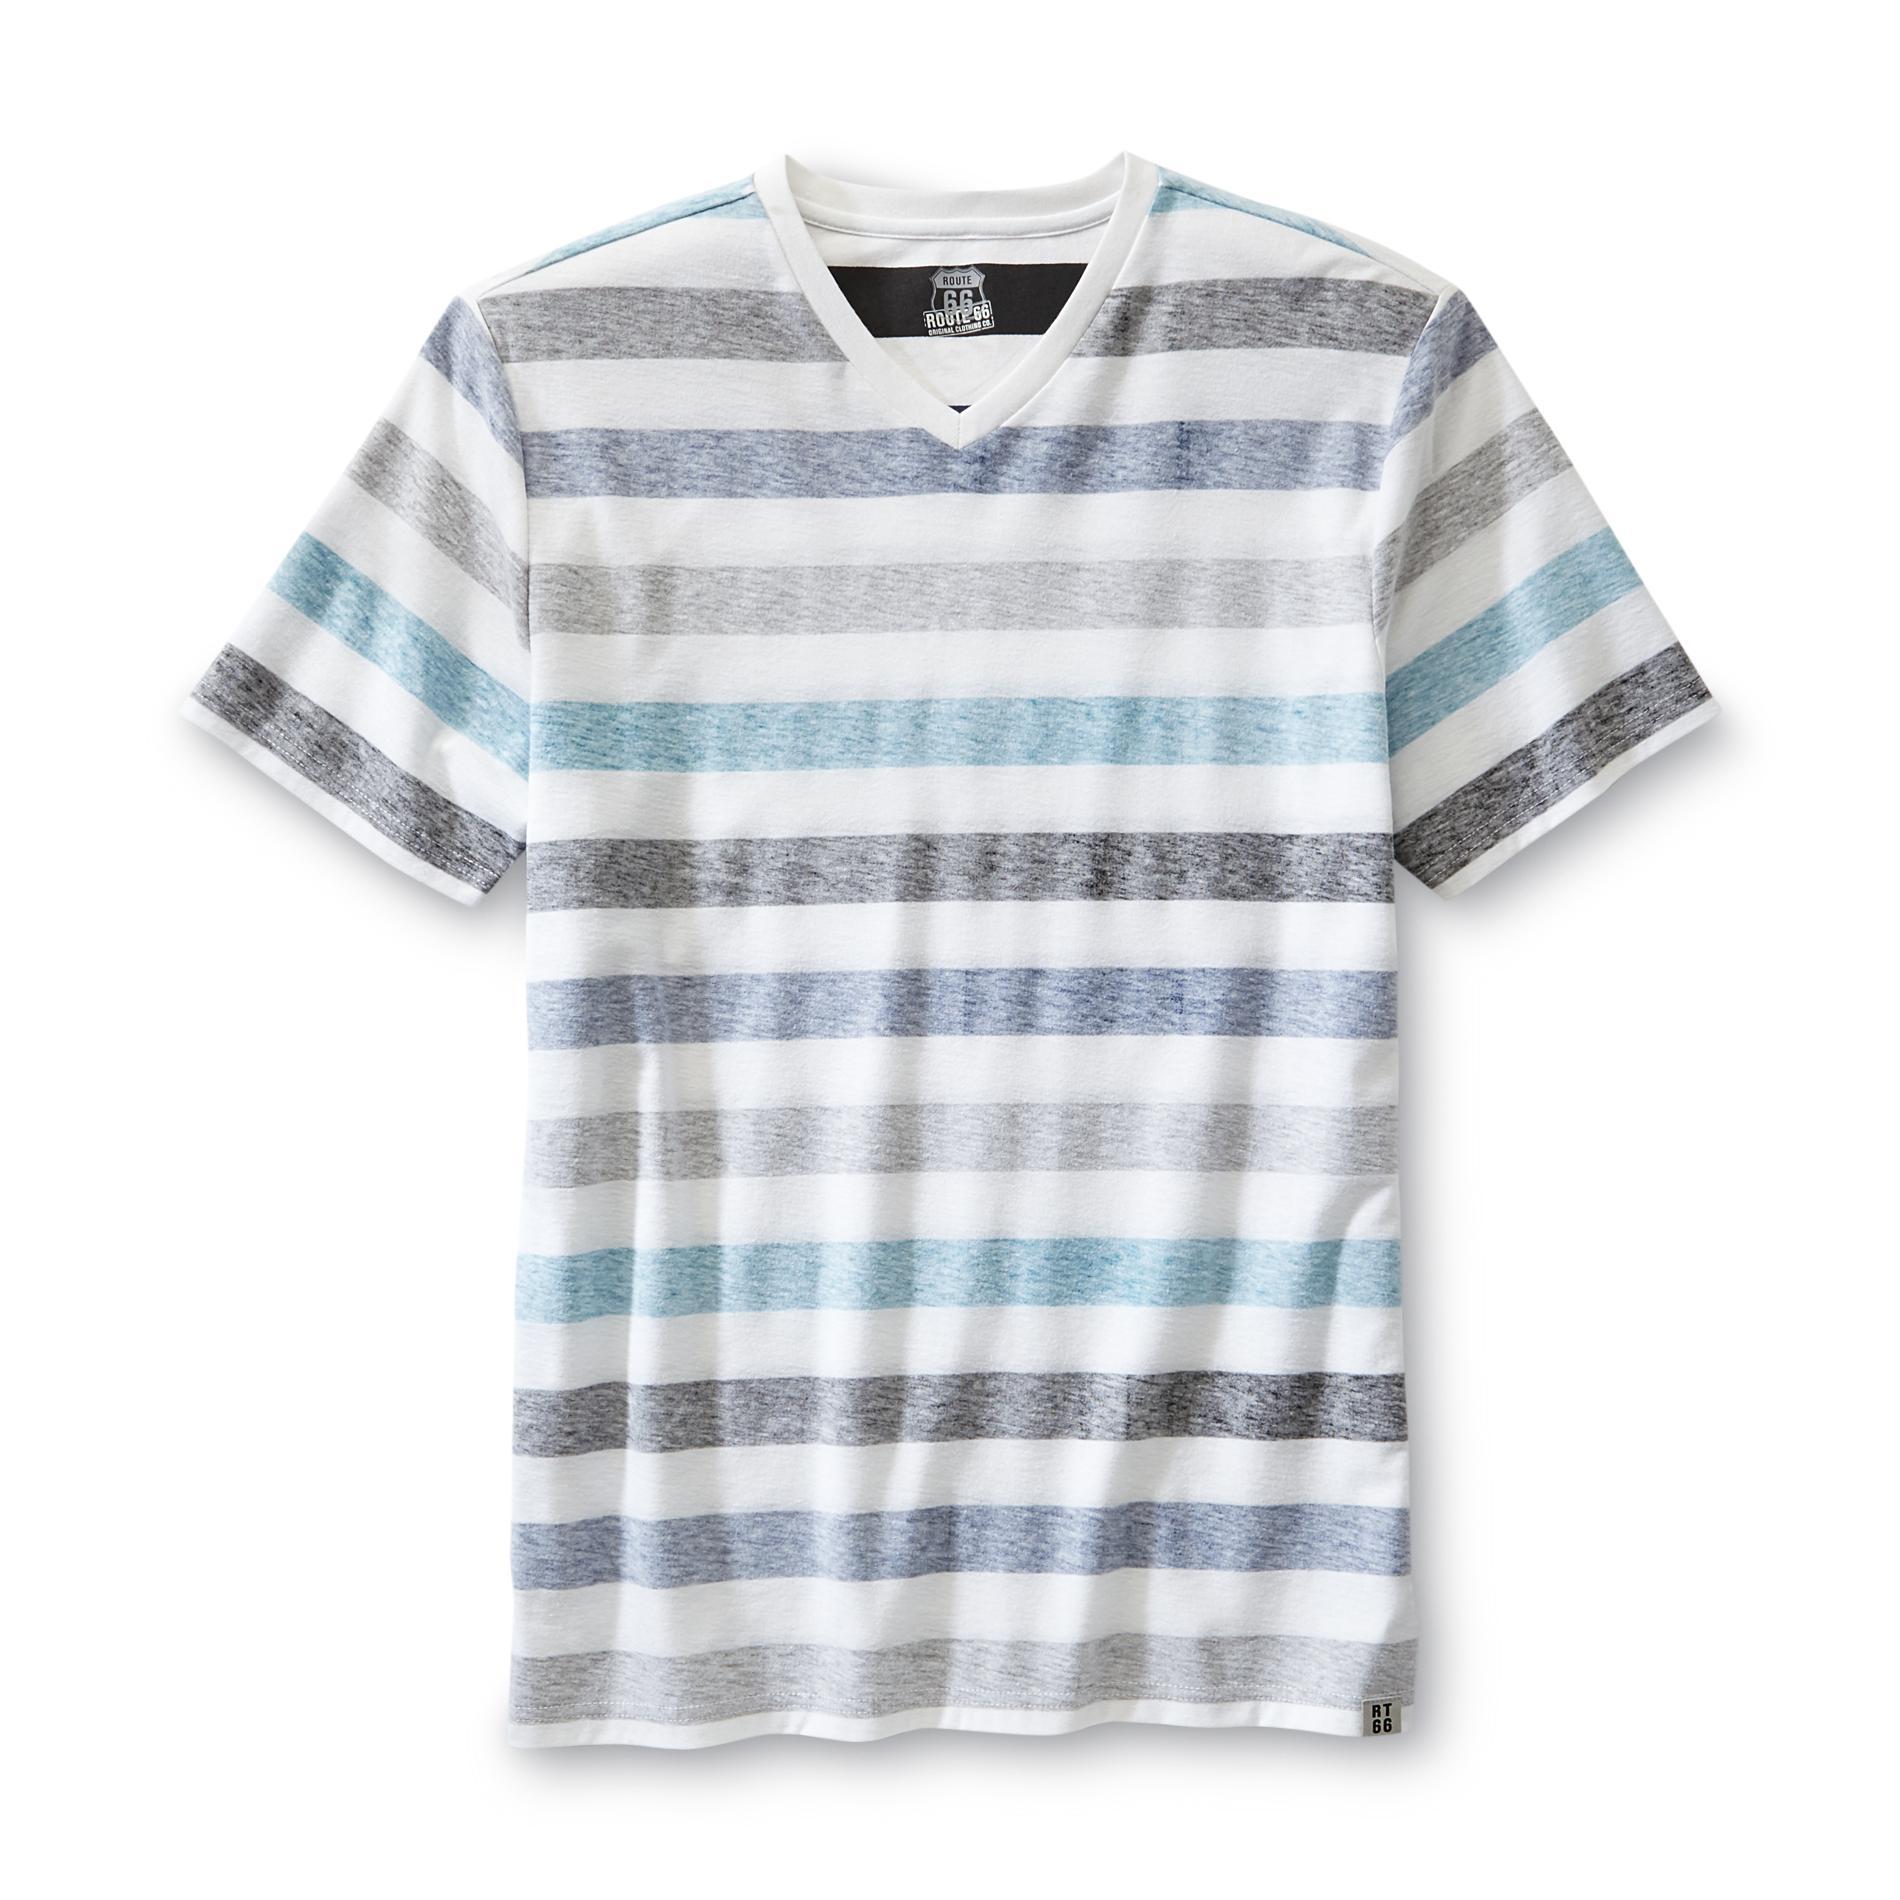 Route 66 Men's Short-Sleeve T-Shirt - Striped